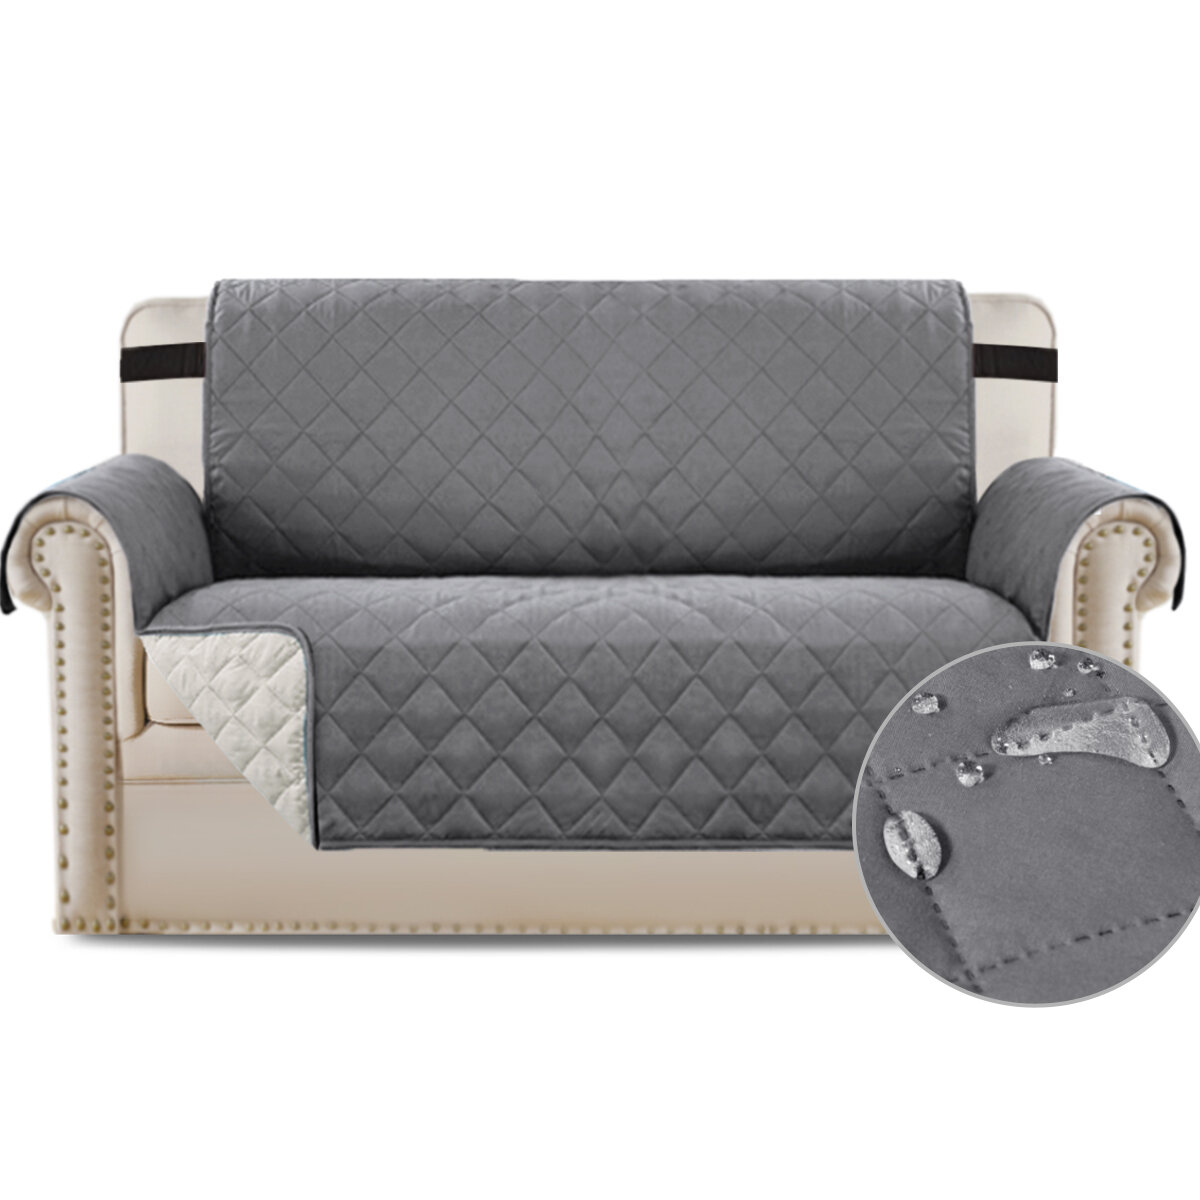 Reversible Non-Slip Box Cushion Sofa Slipcover Symple Stuff Fabric: Light Gray, Size: 63 H x 78 W x 22 D